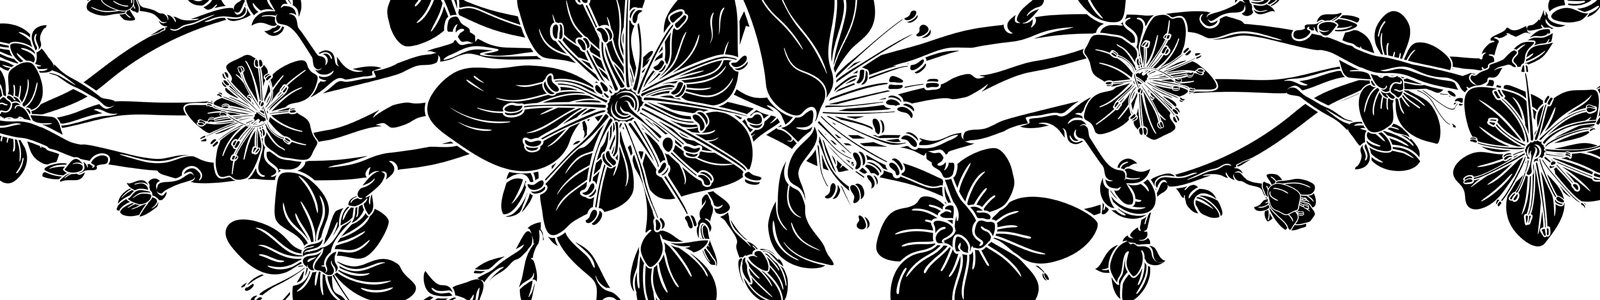 №7411 - Цветение сакуры на белом фоне